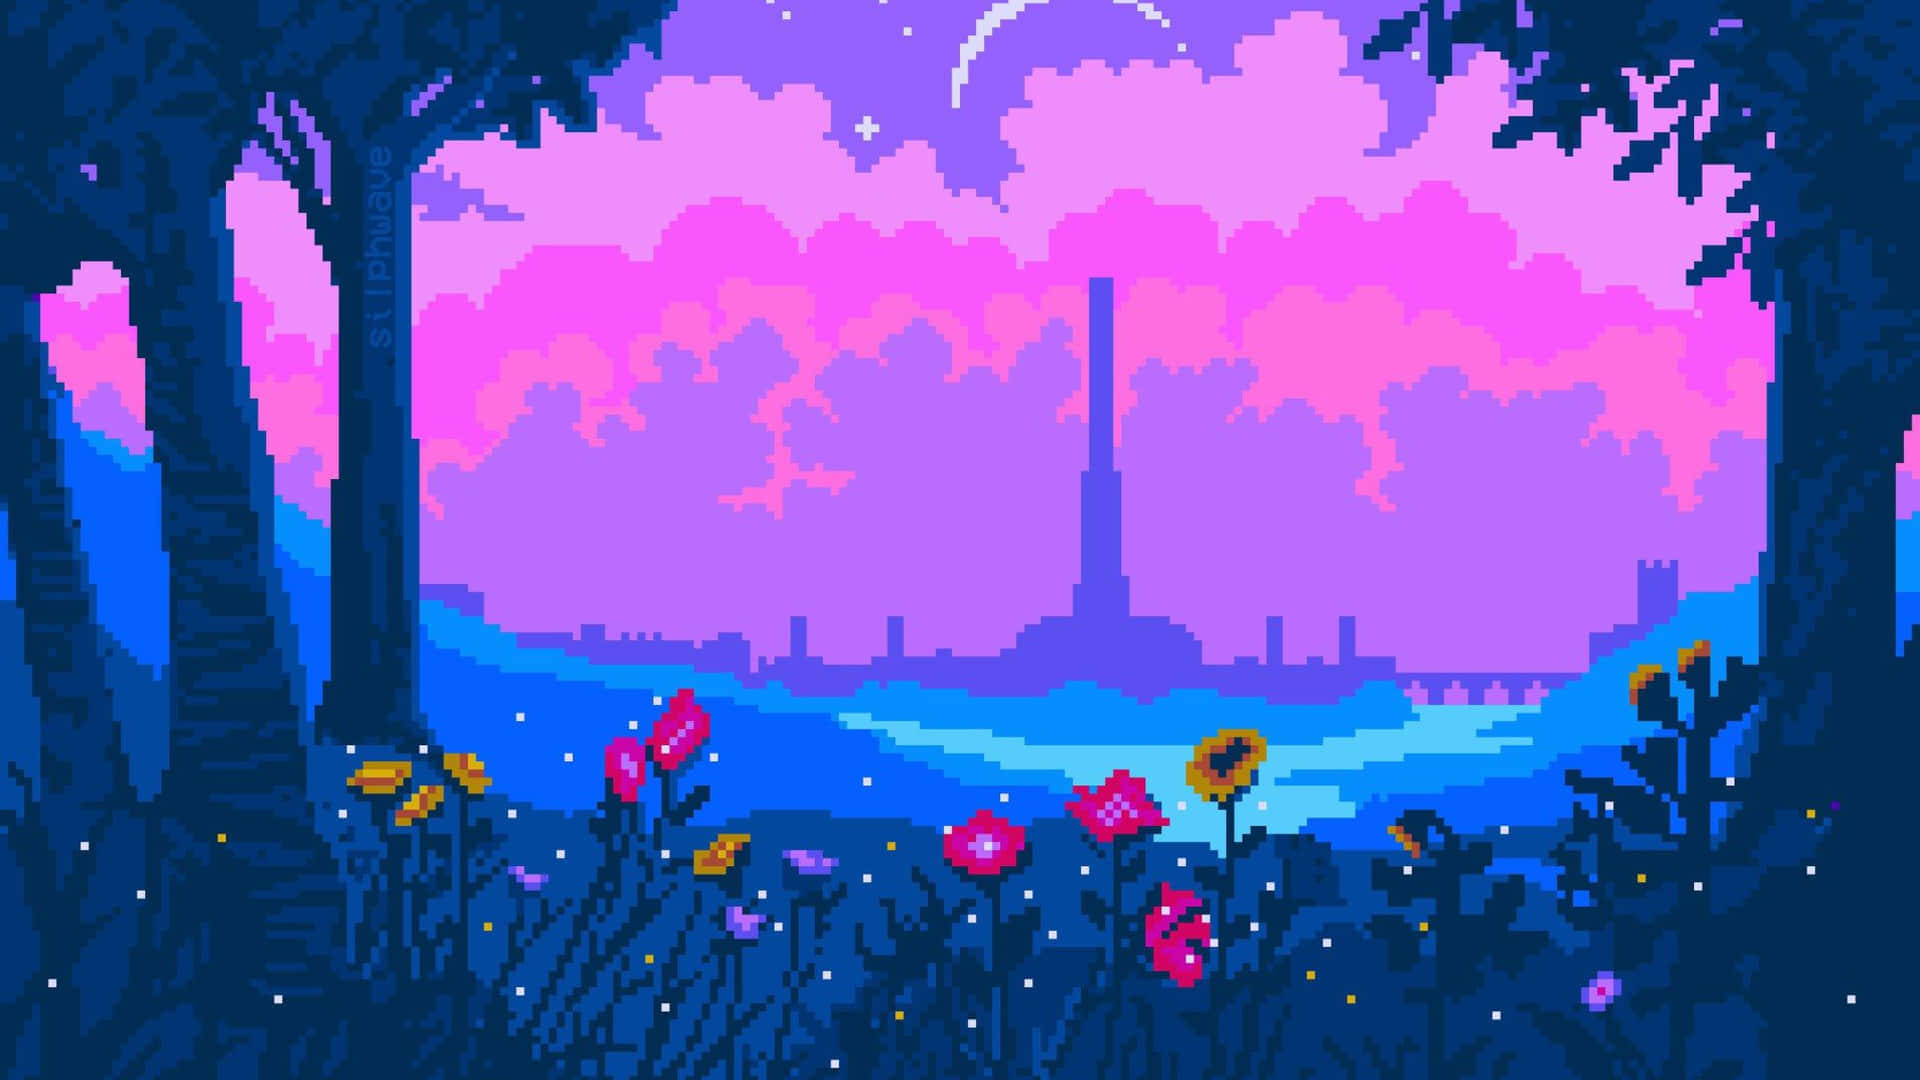 2048x1152 Aesthetic Pink And Purple City Pixel Art Wallpaper